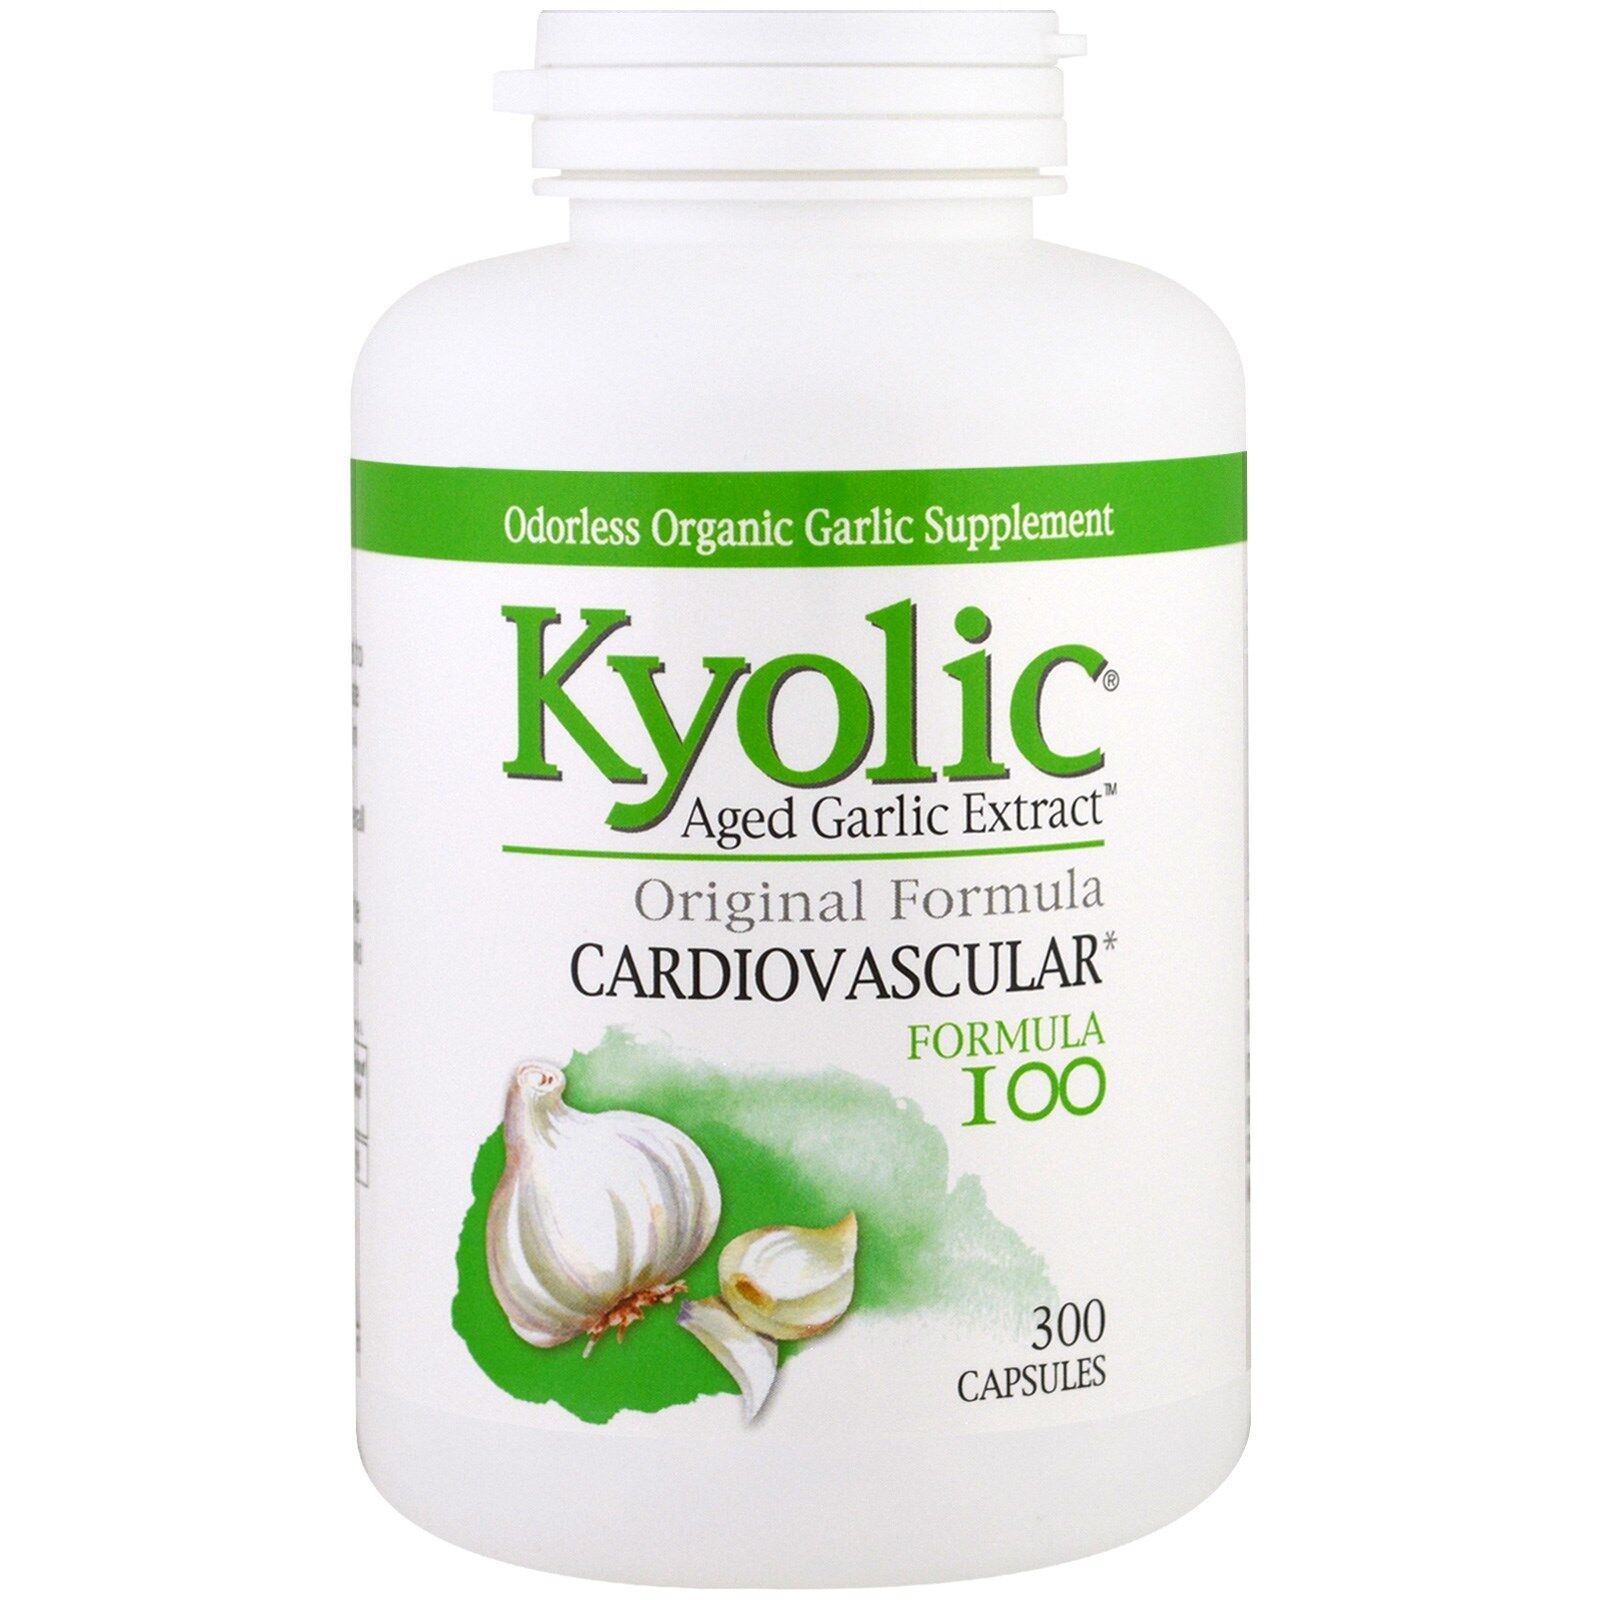 Kyolic Aged Garlic Extract Cardiovascular Formula 100, 300 capsules - SALE